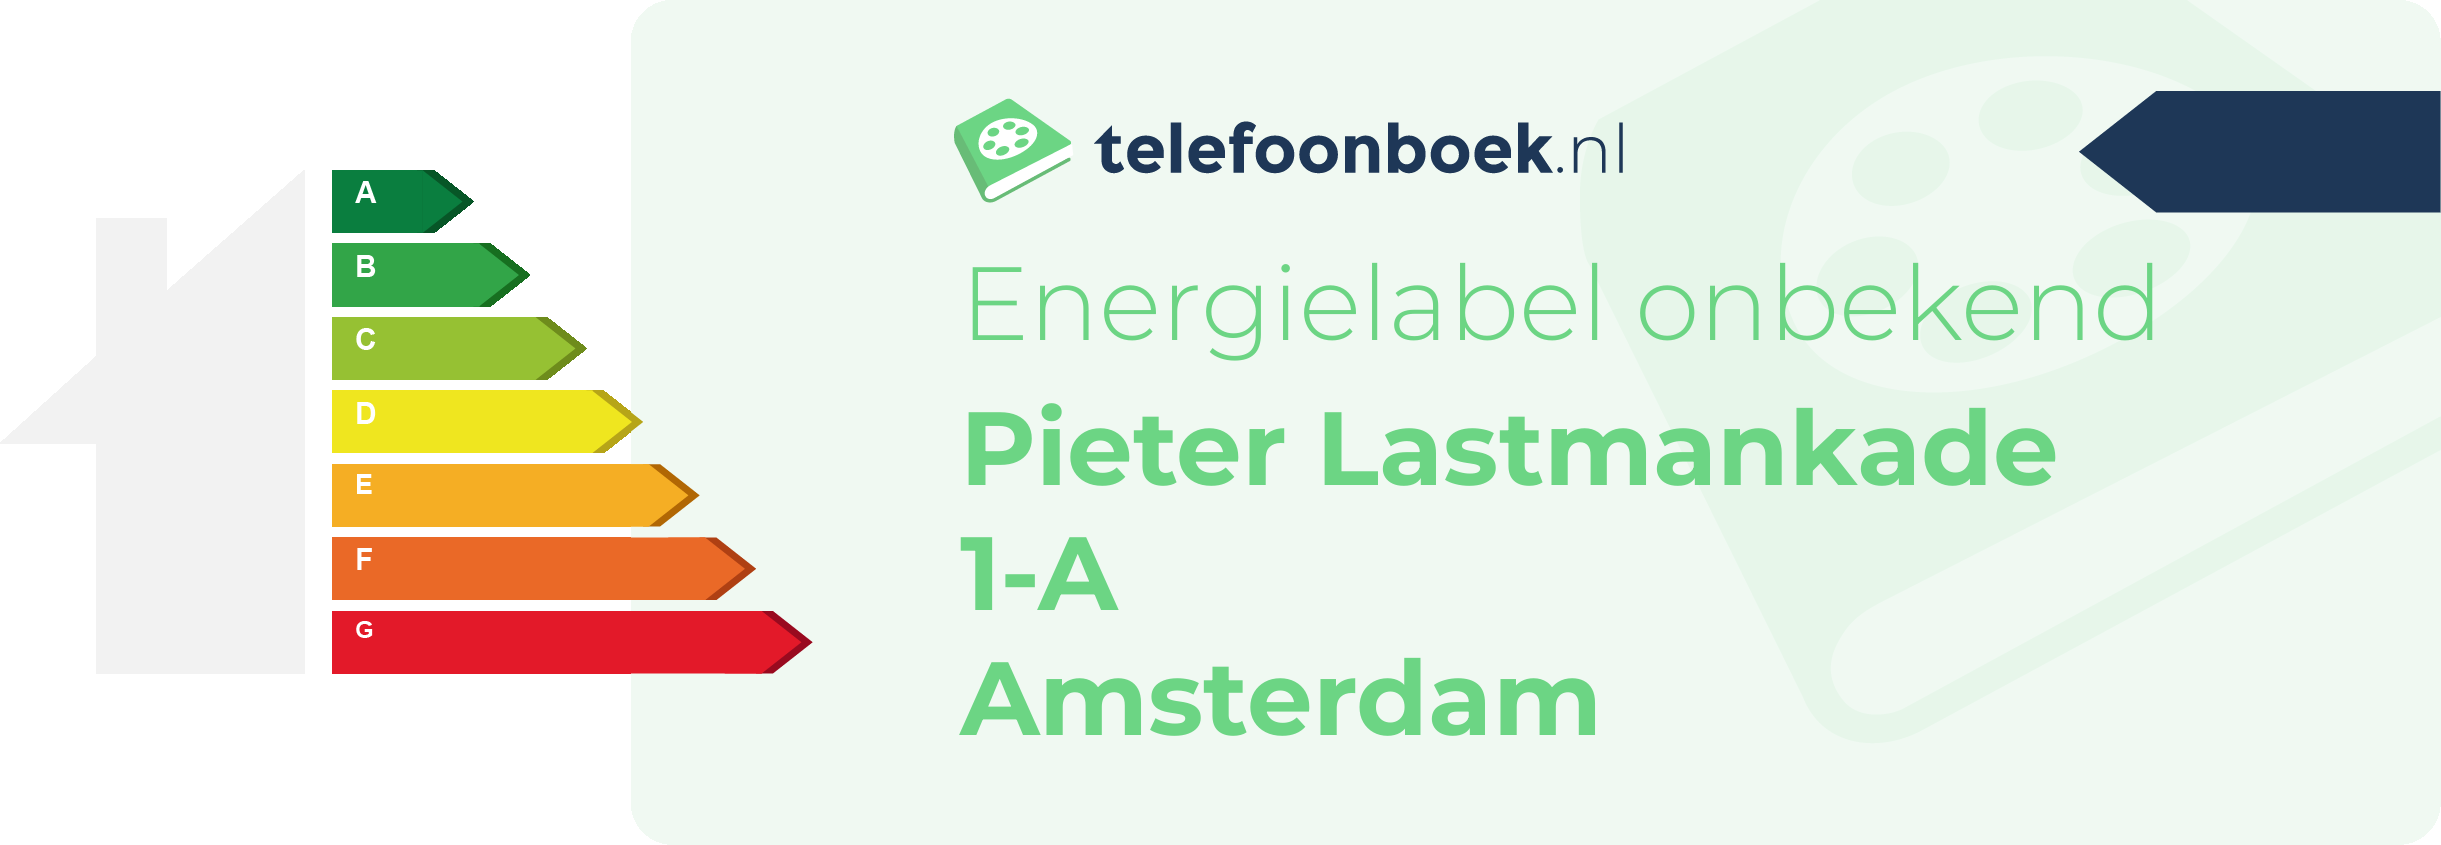 Energielabel Pieter Lastmankade 1-A Amsterdam